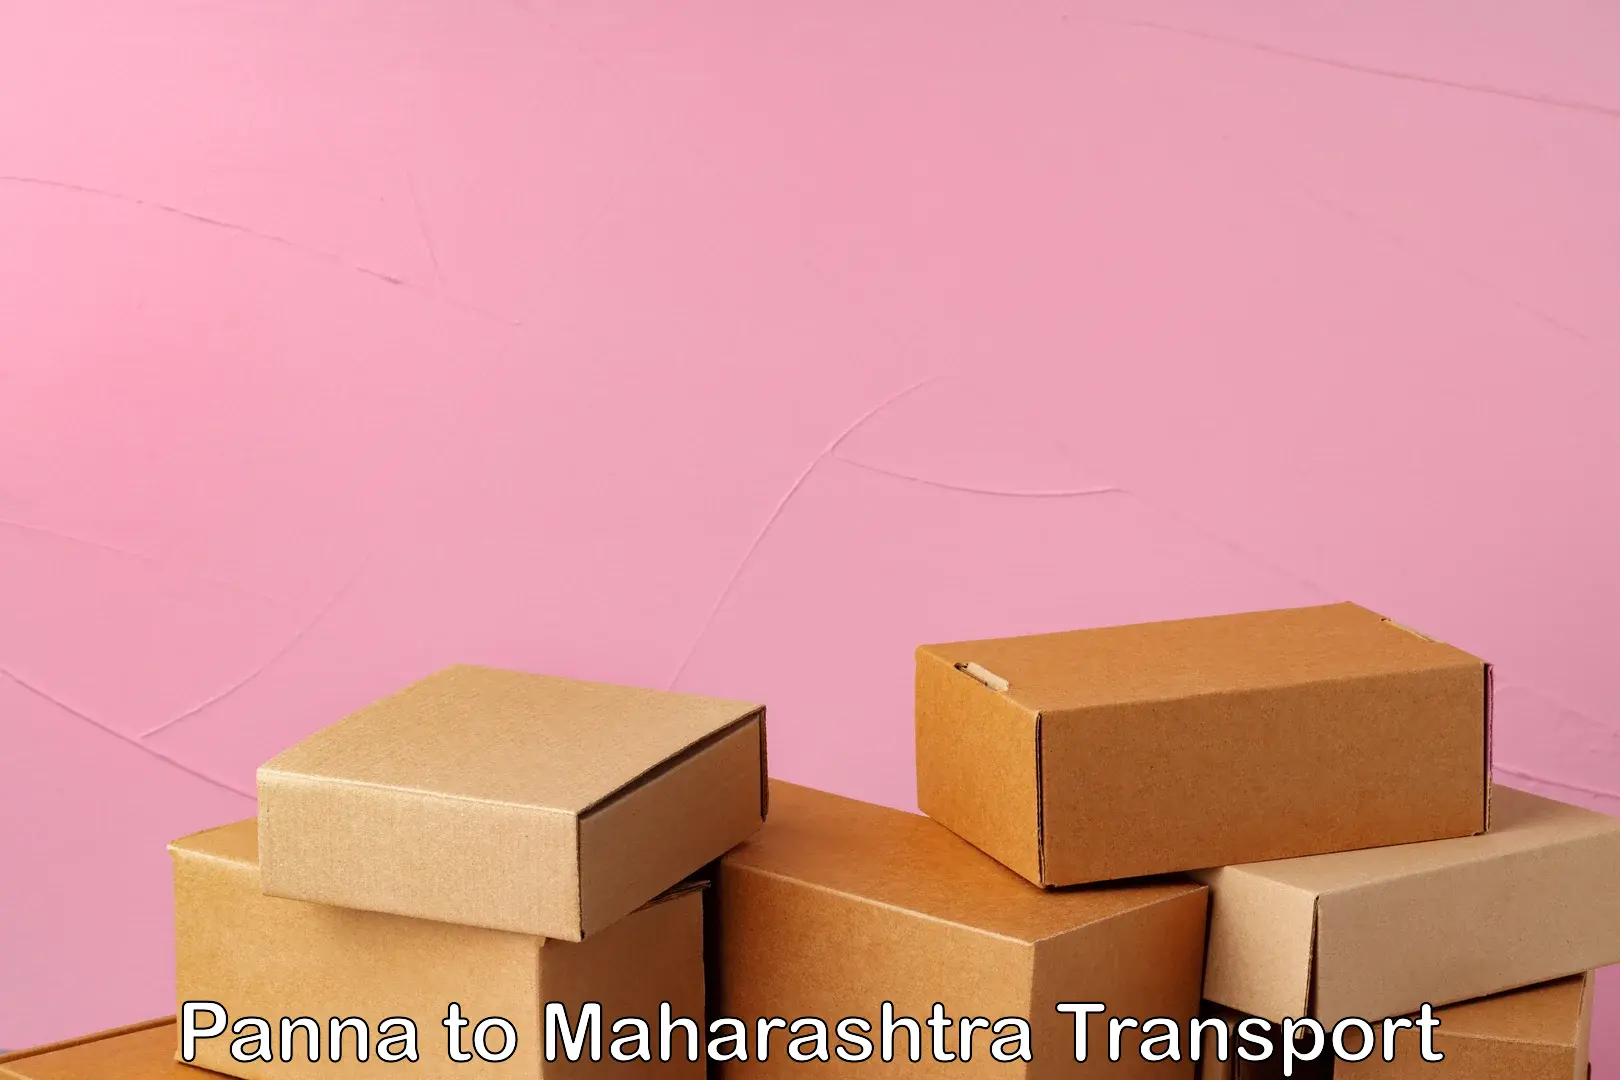 Sending bike to another city Panna to Maharashtra